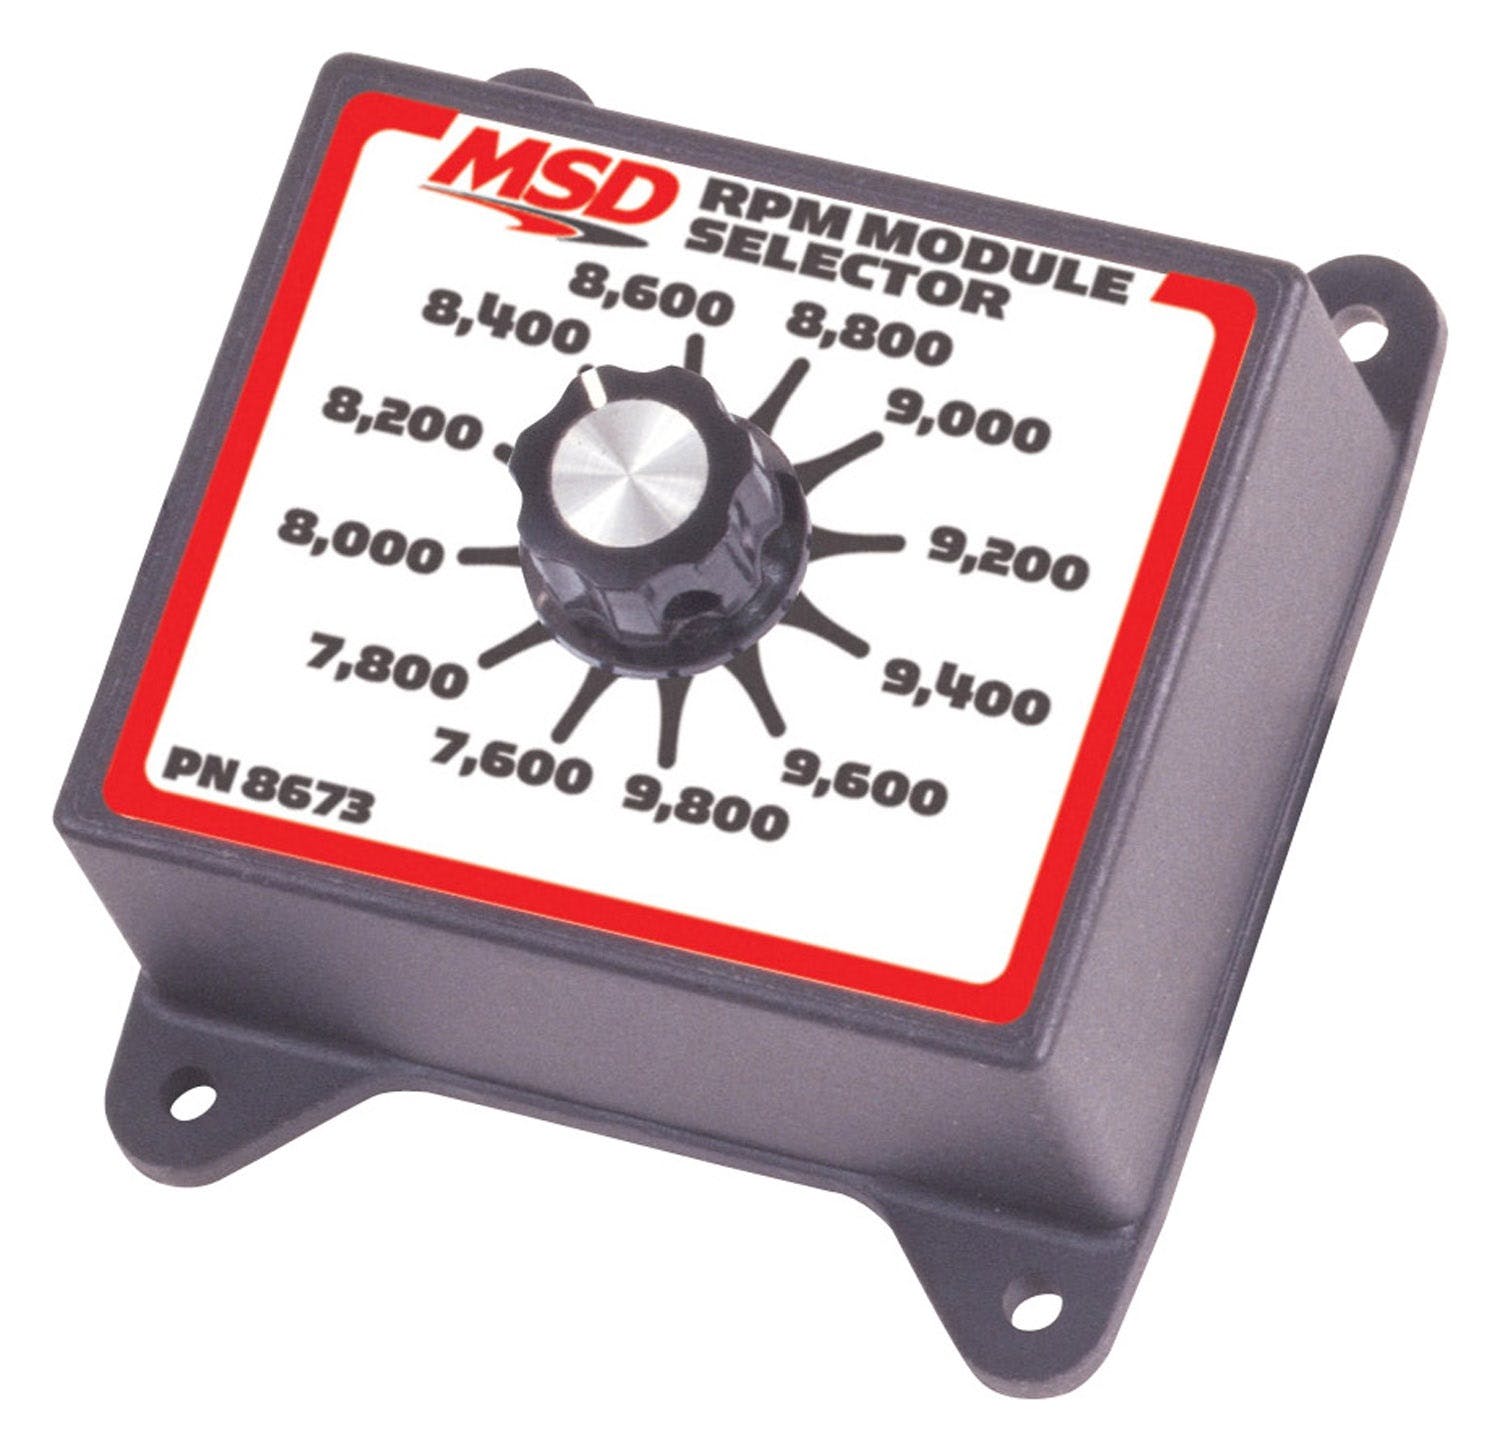 MSD Performance 8673 Selector Switch, 7.6K-9.8K